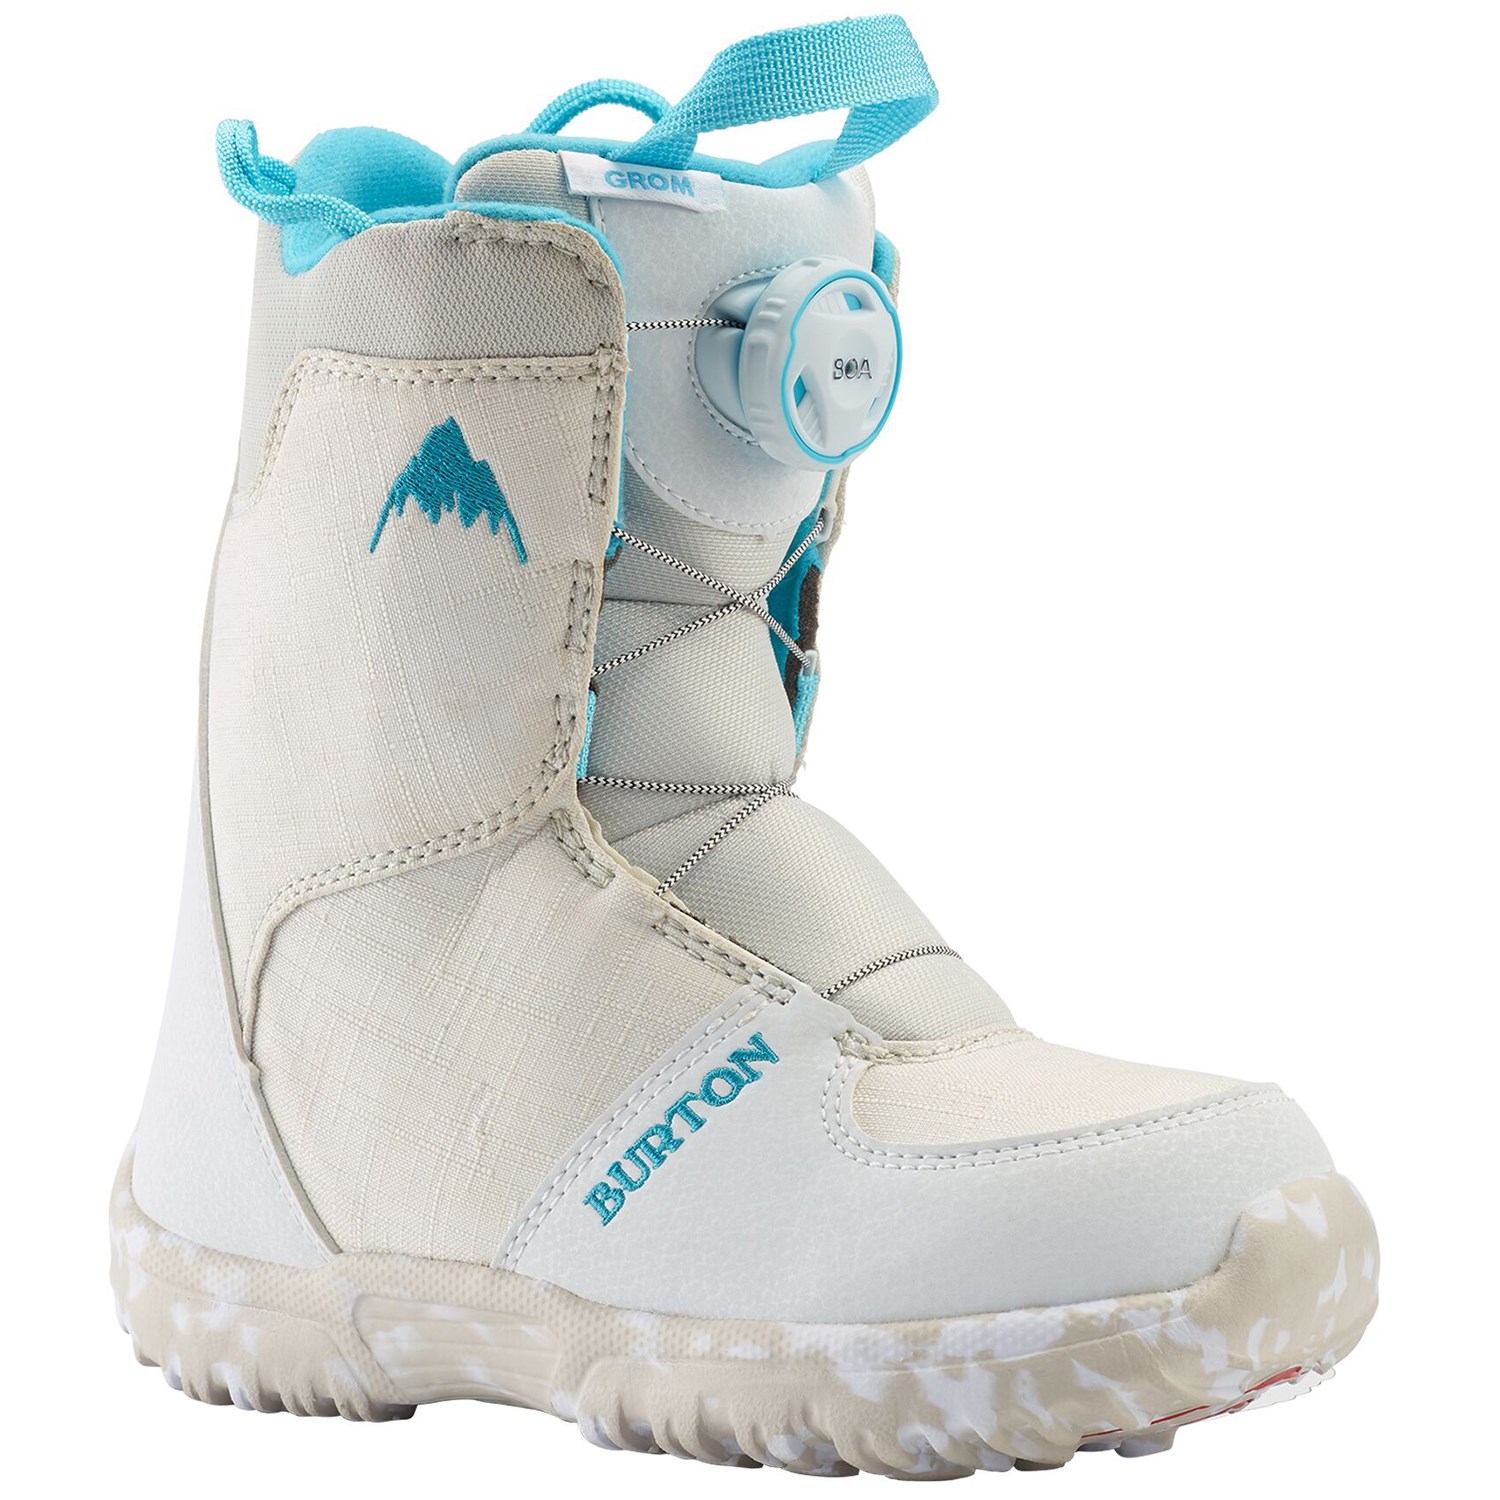 Ботинки для сноуборда Burton Grom Boa, белый детские сноубордические ботинки burton grom boa р 11c white